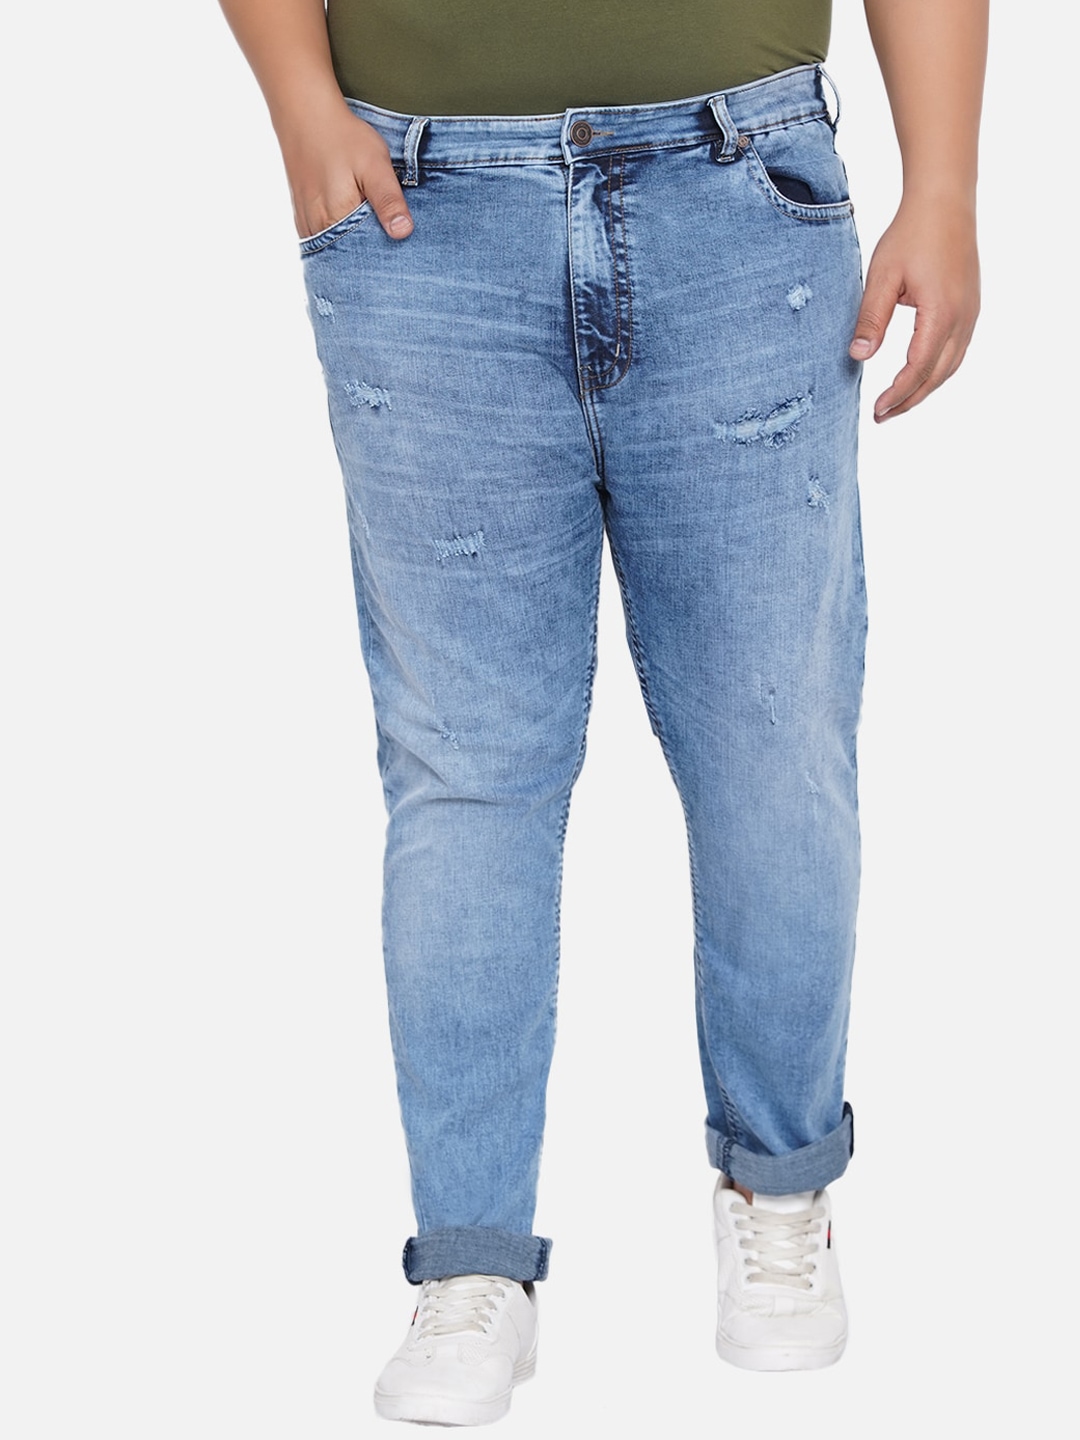 

John Pride Plus Size Men Mildly Distressed Heavy Fade Stretchable Jeans, Blue